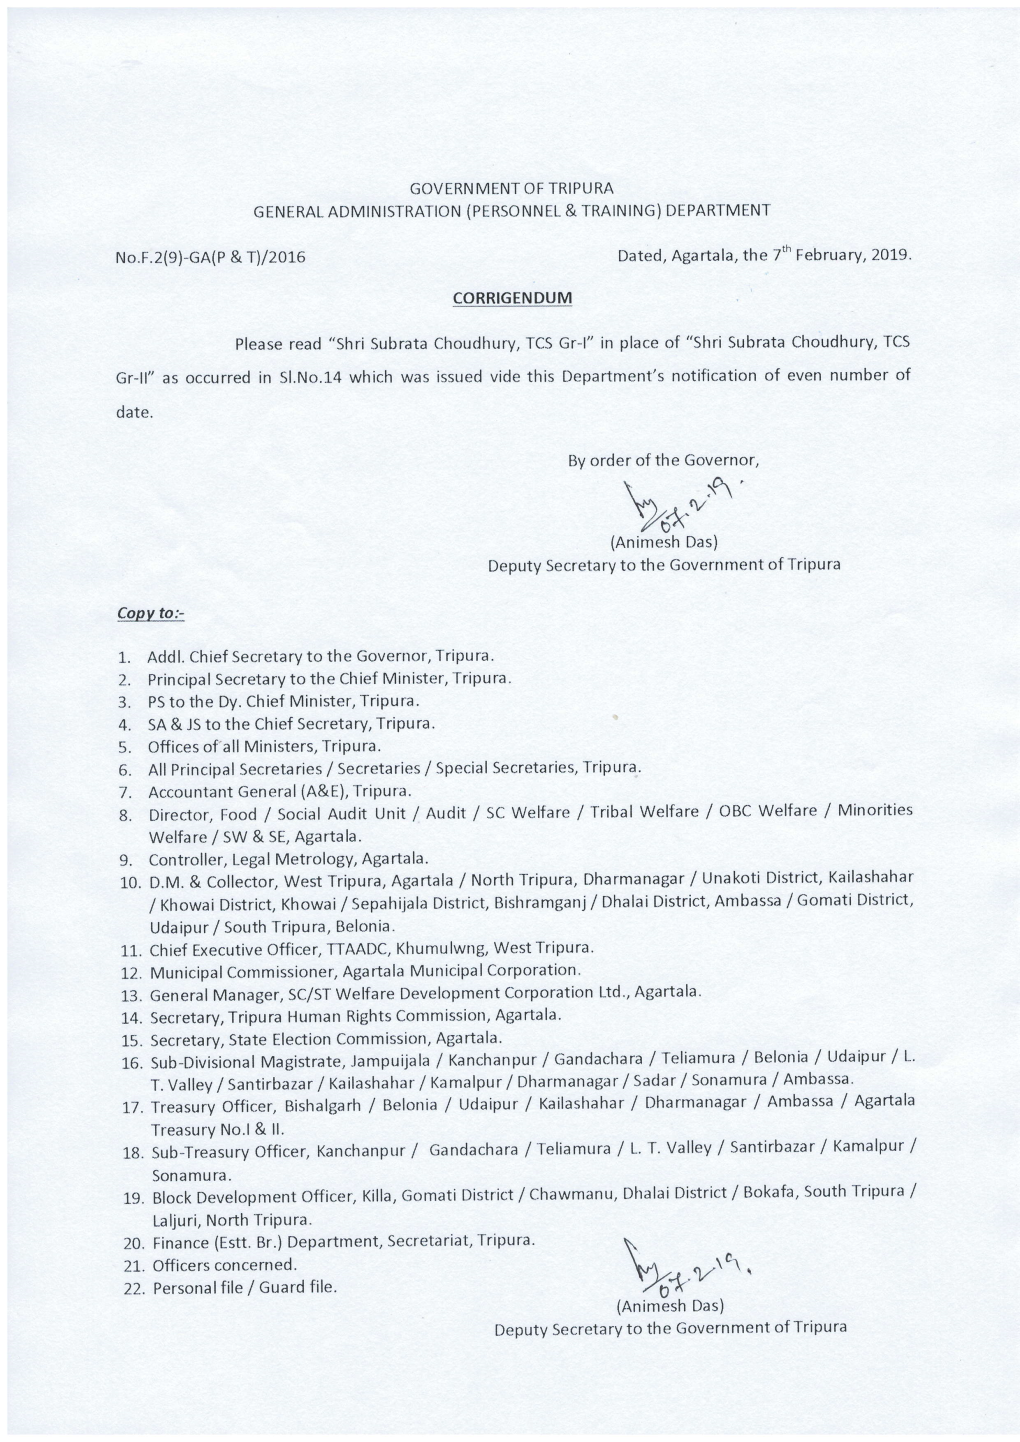 \A."''R' (Animesh Das) Deputy Secretary to the Government of Tripura